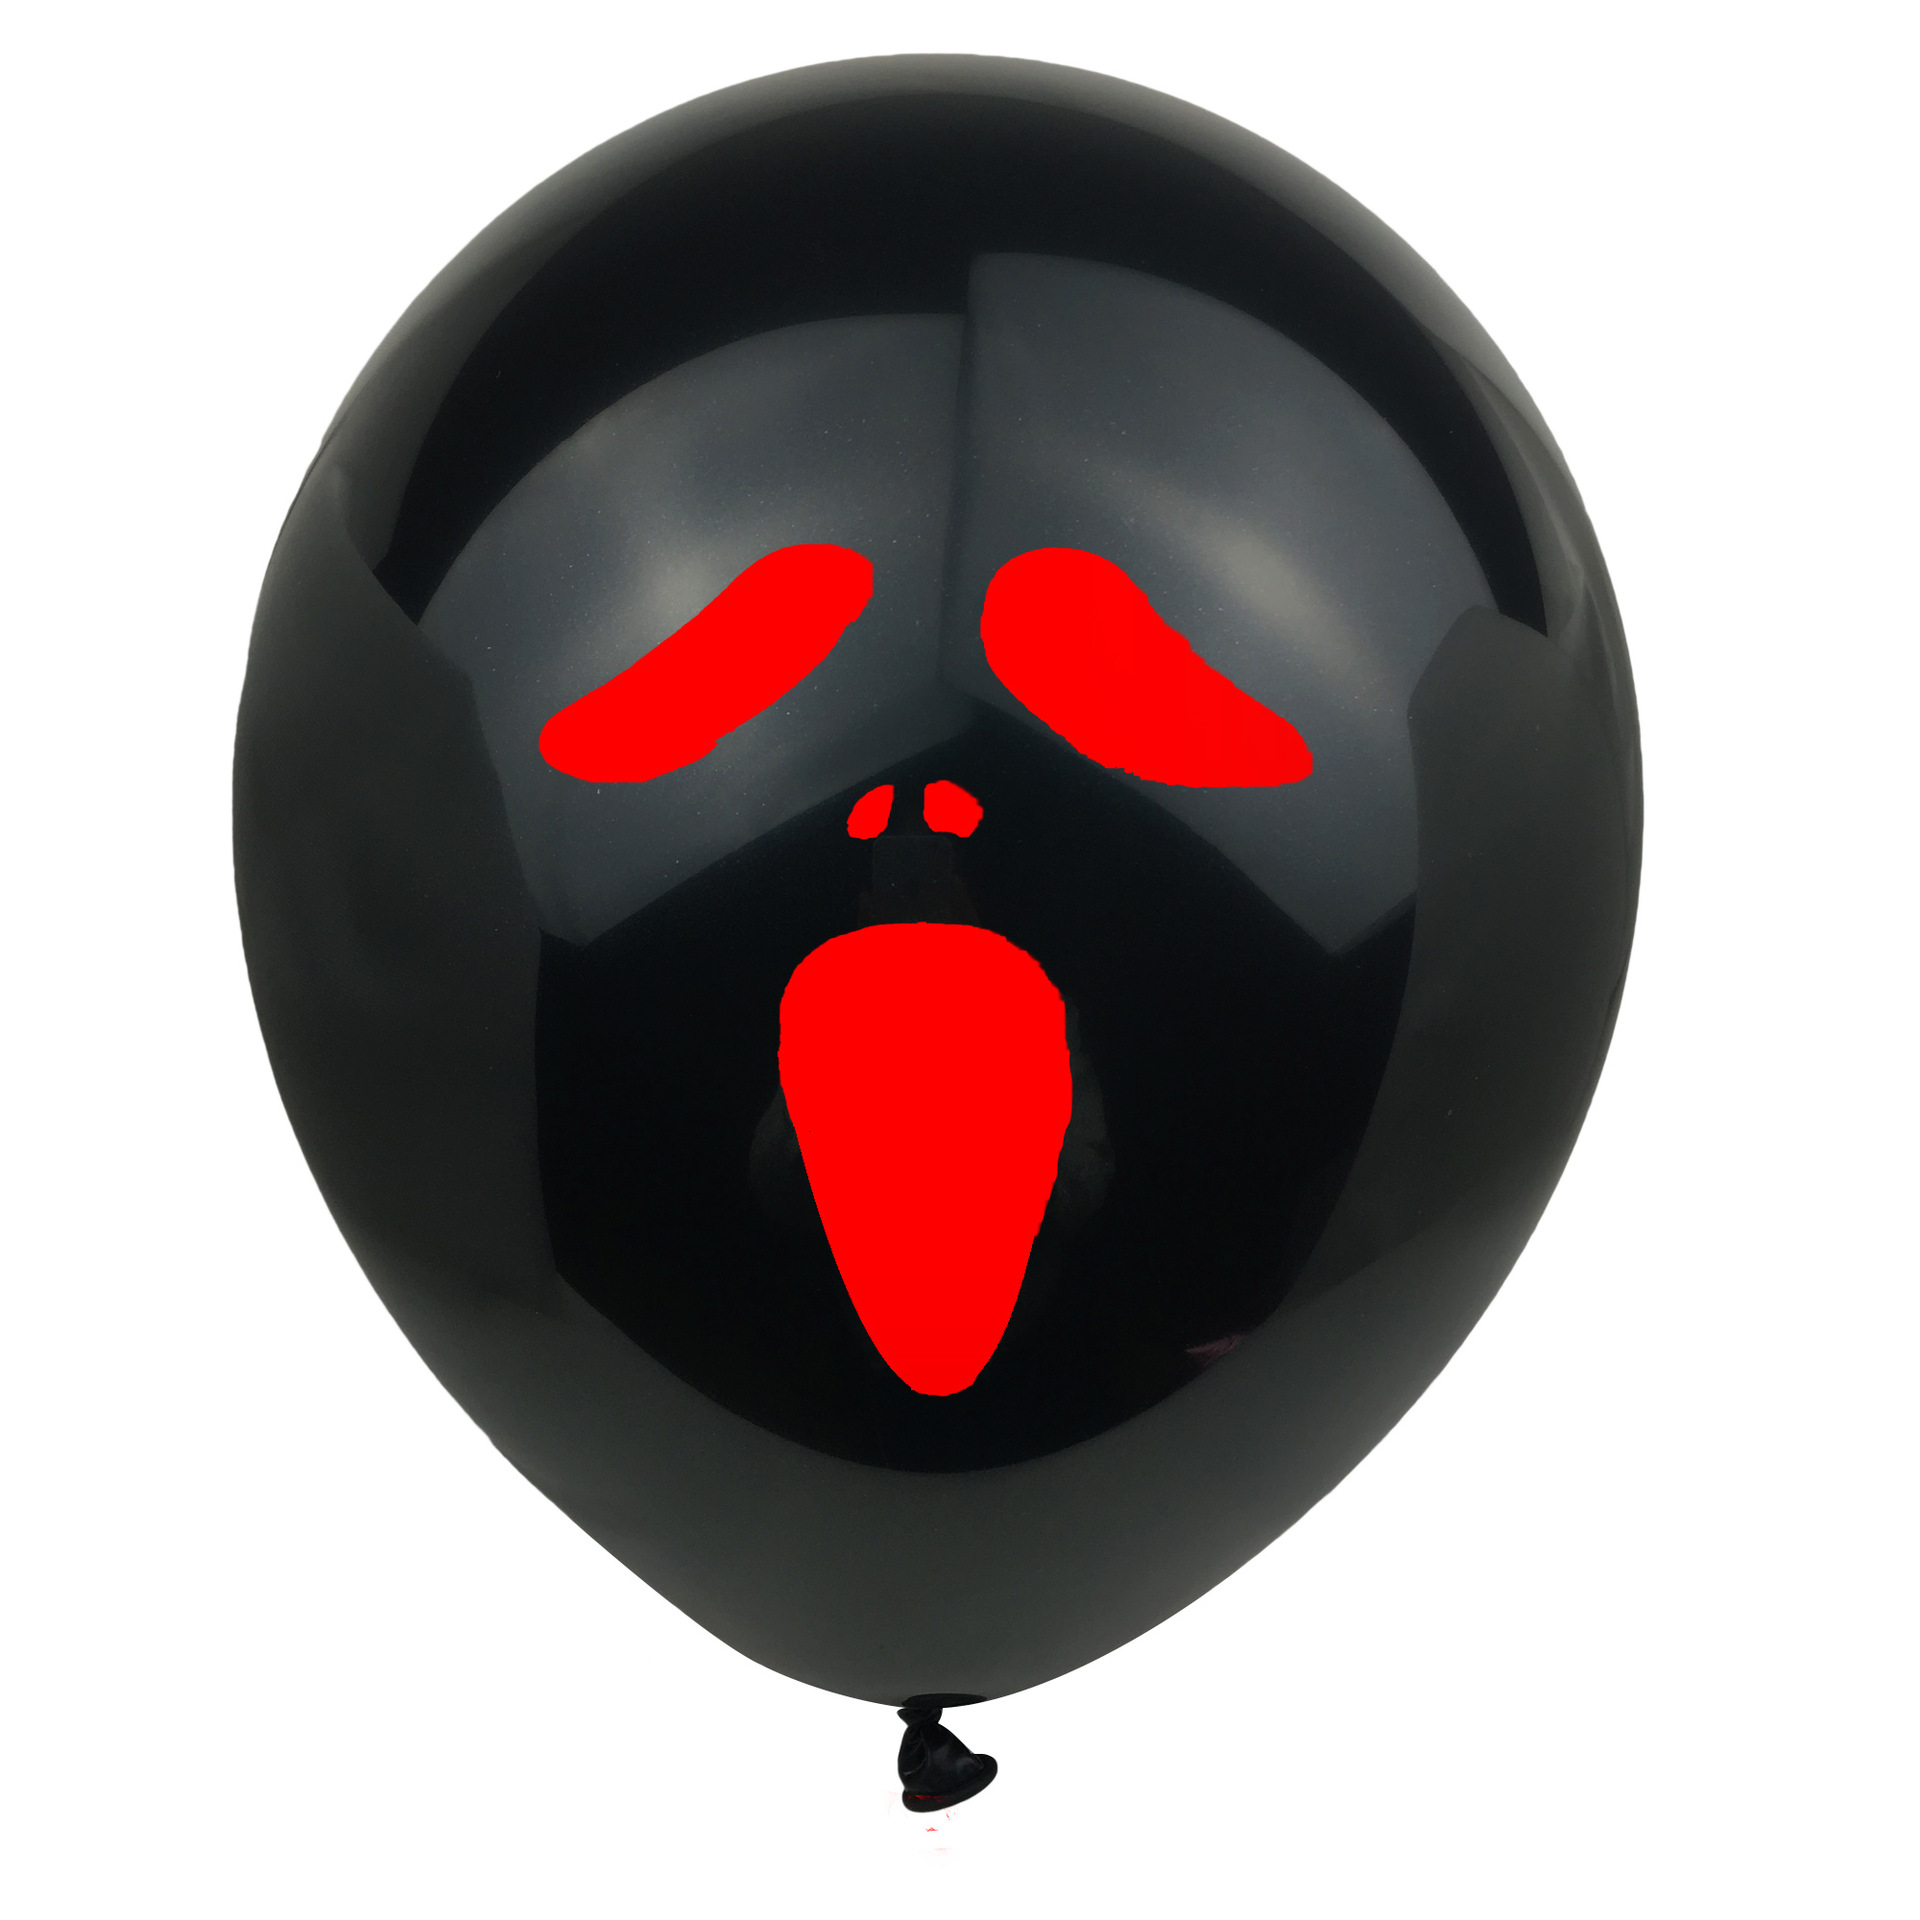 Halloween Latex Balloons
1set per 10pcs